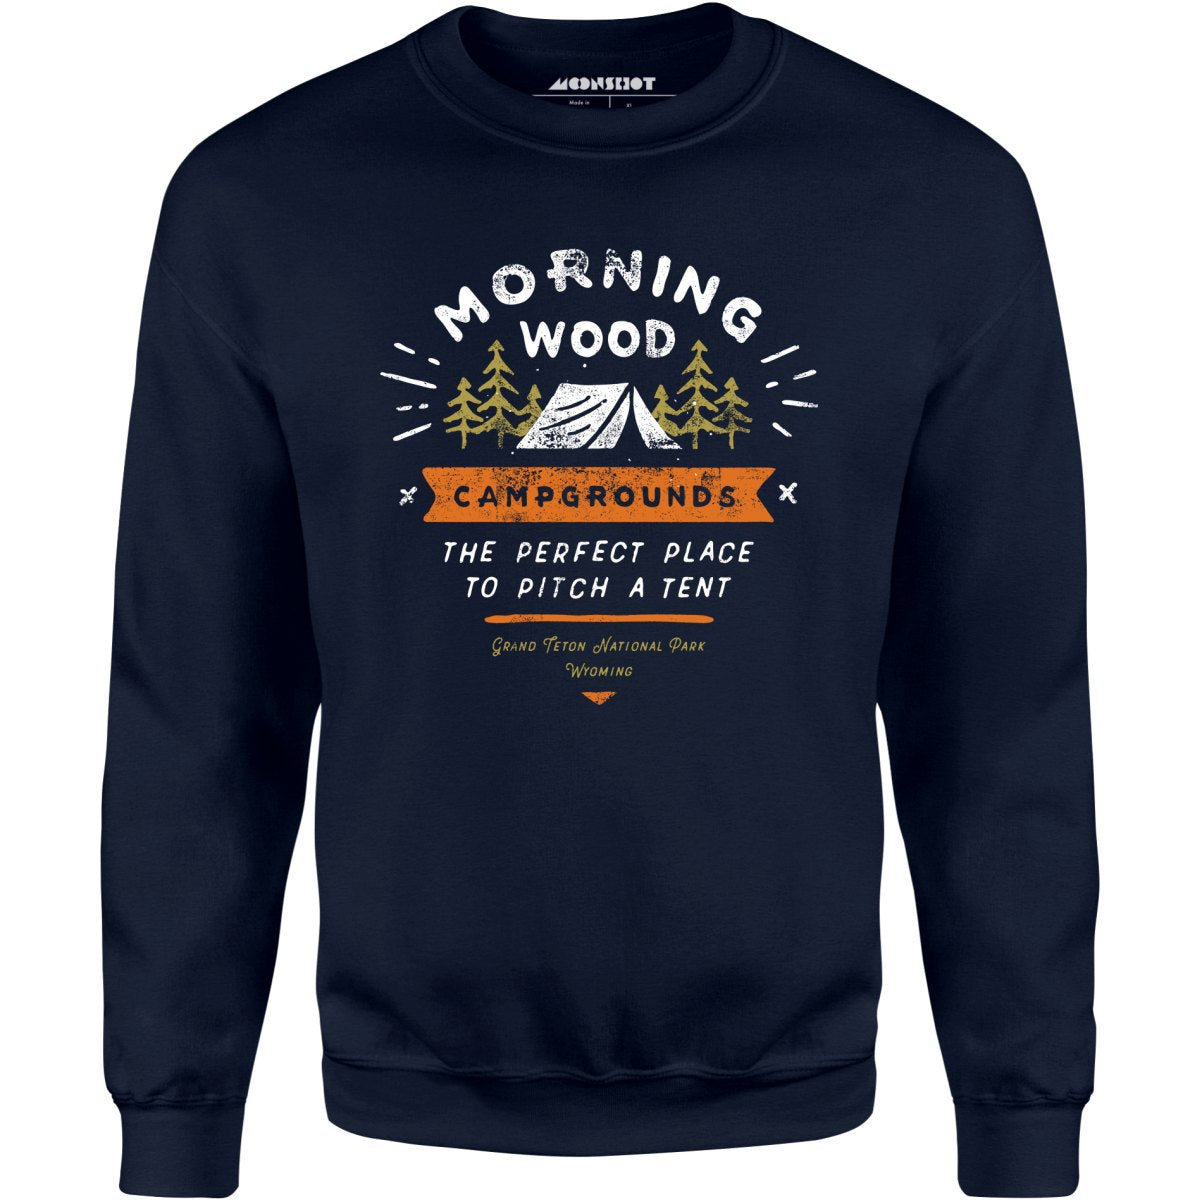 Morning Wood Campgrounds - Unisex Sweatshirt